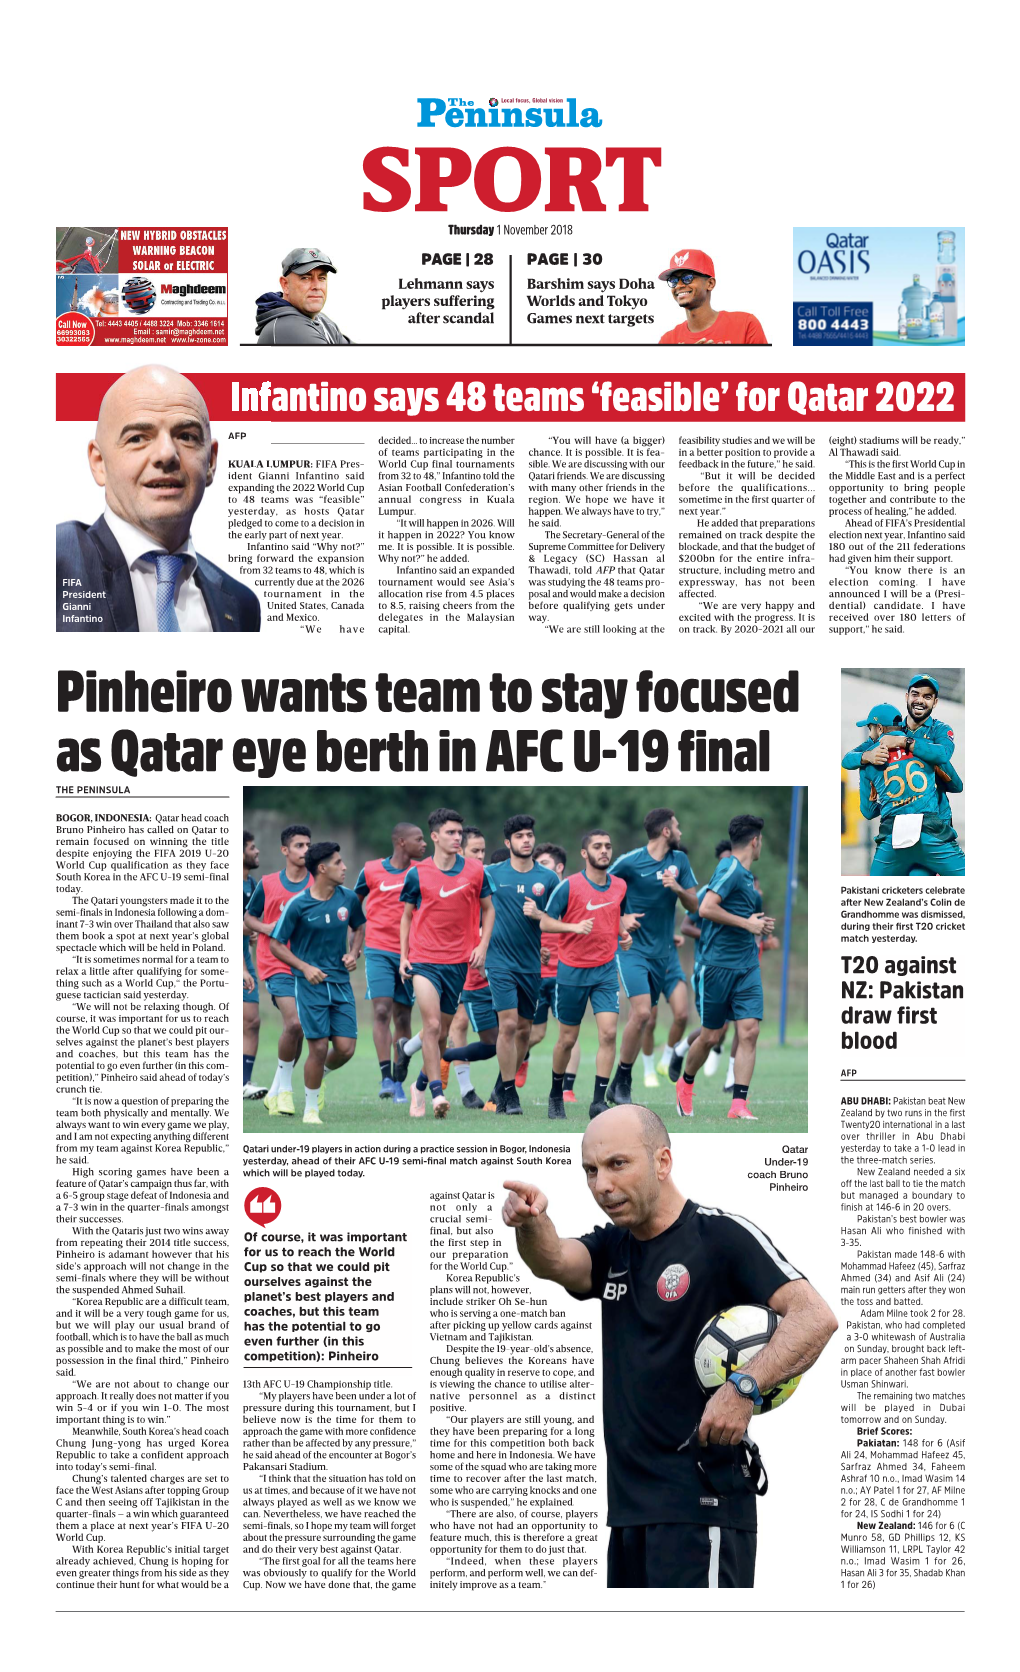 Pinheiro Wants Team to Stay Focused As Qatar Eye Berth in AFC U-19 Final the PENINSULA